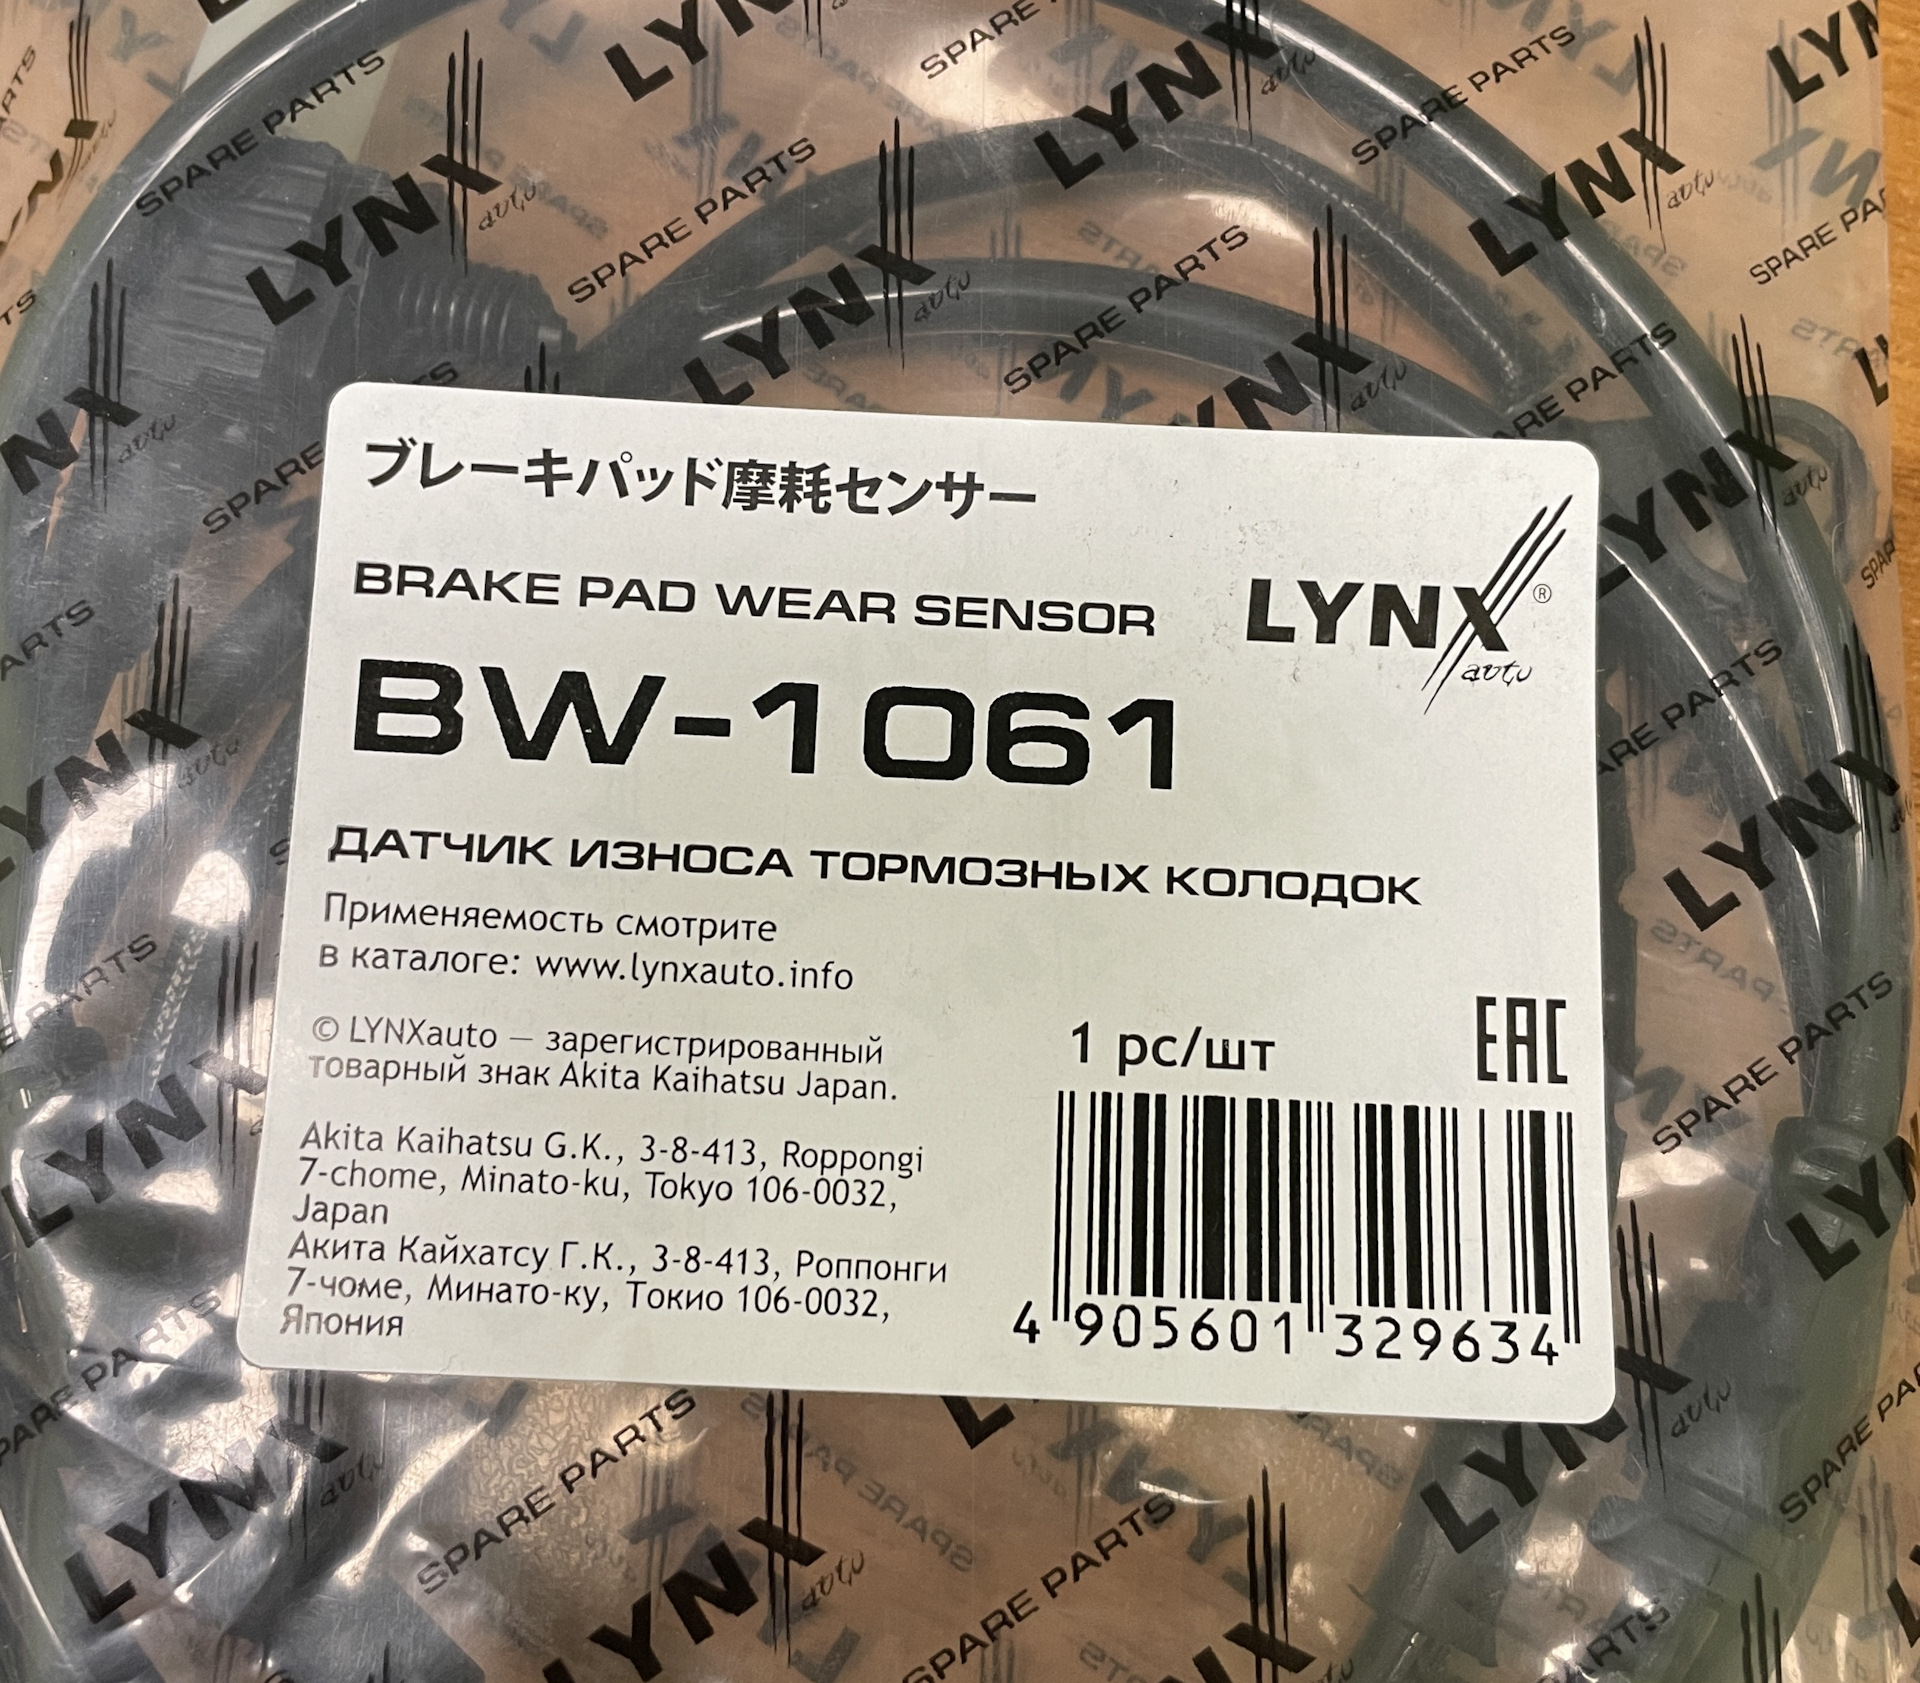 Деталь износа e307488. Lynx SG-1061. Палец jev00066 - производитель lget. Производитель lynx отзывы